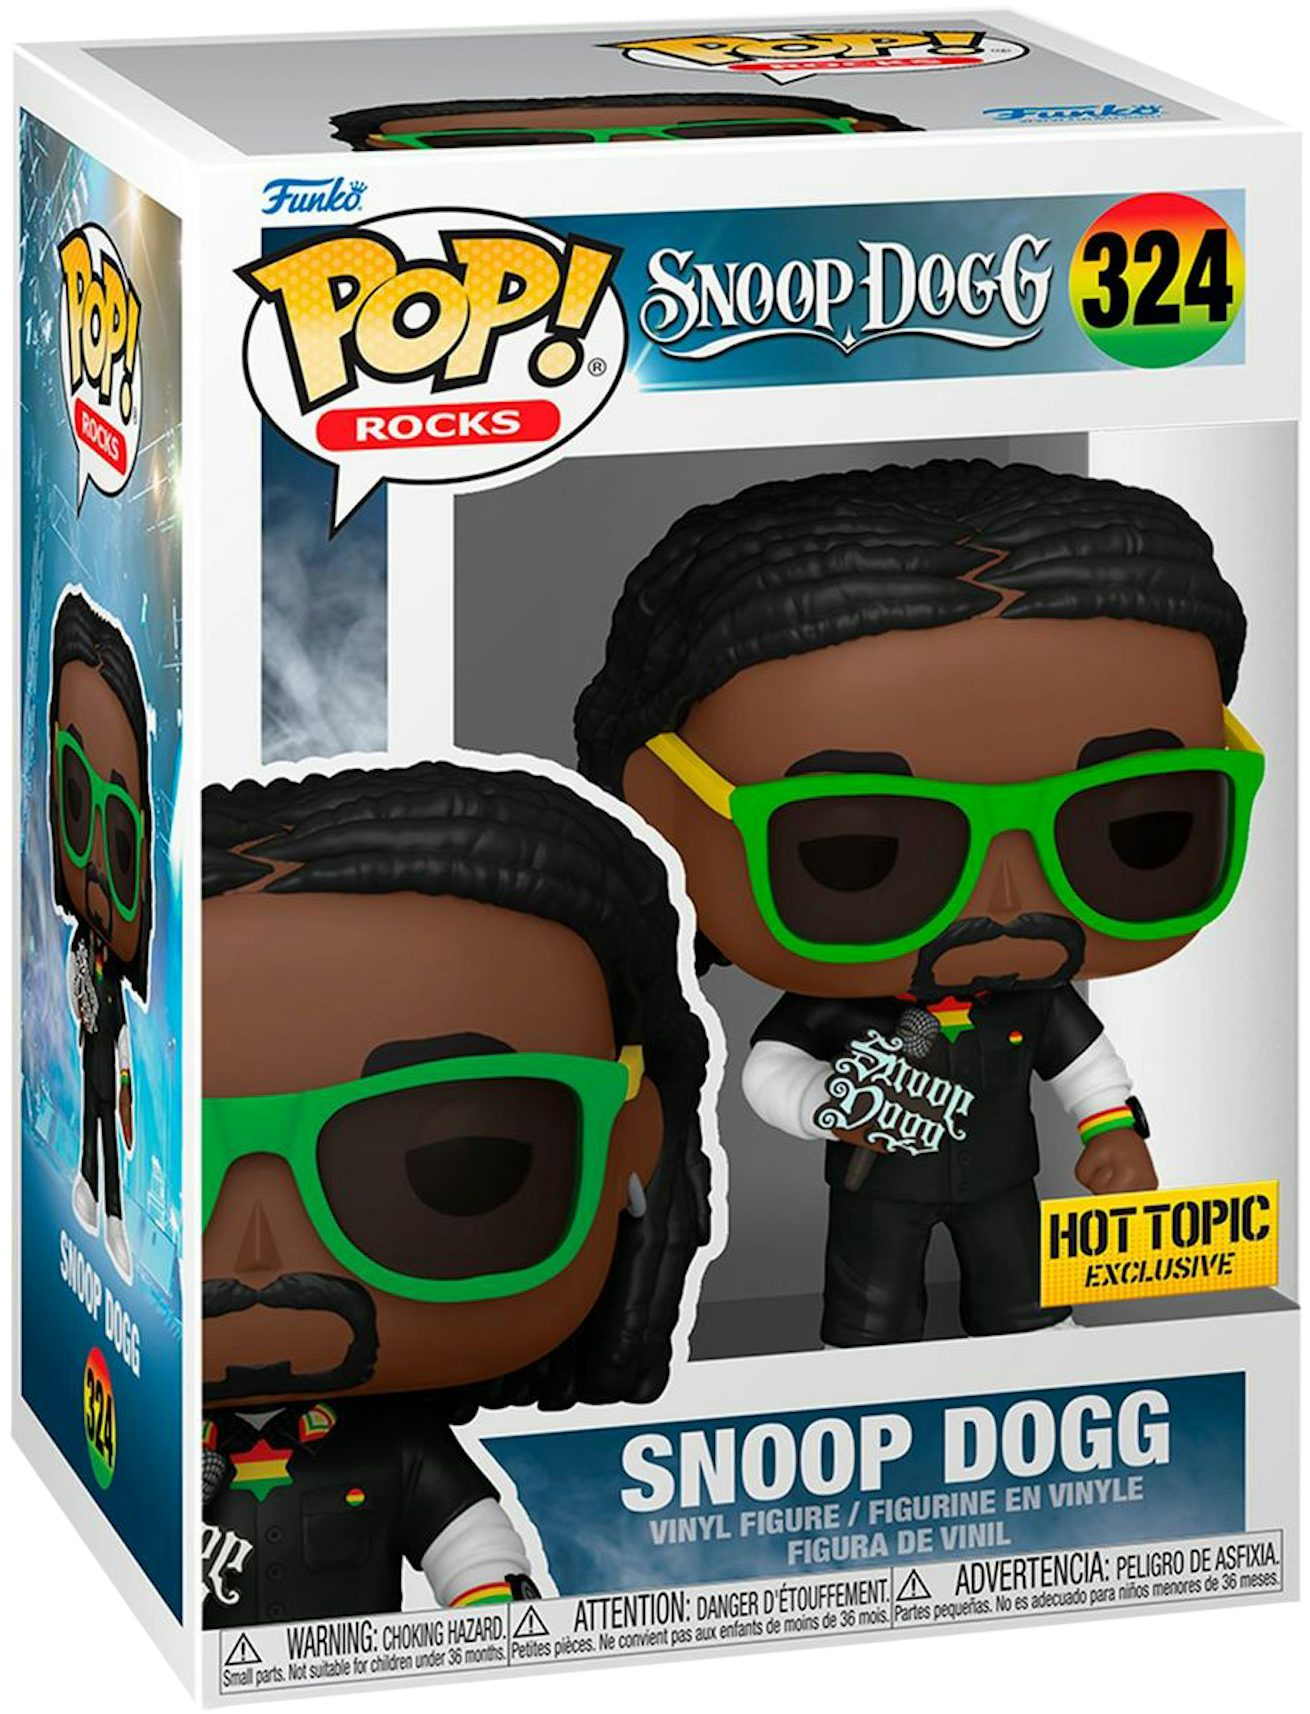 https://images.stockx.com/images/Funko-Pop-Rocks-Snoop-Dogg-Hot-Topic-Exclusive-Figure-324.jpg?fit=fill&bg=FFFFFF&w=1200&h=857&fm=jpg&auto=compress&dpr=2&trim=color&updated_at=1682576459&q=60